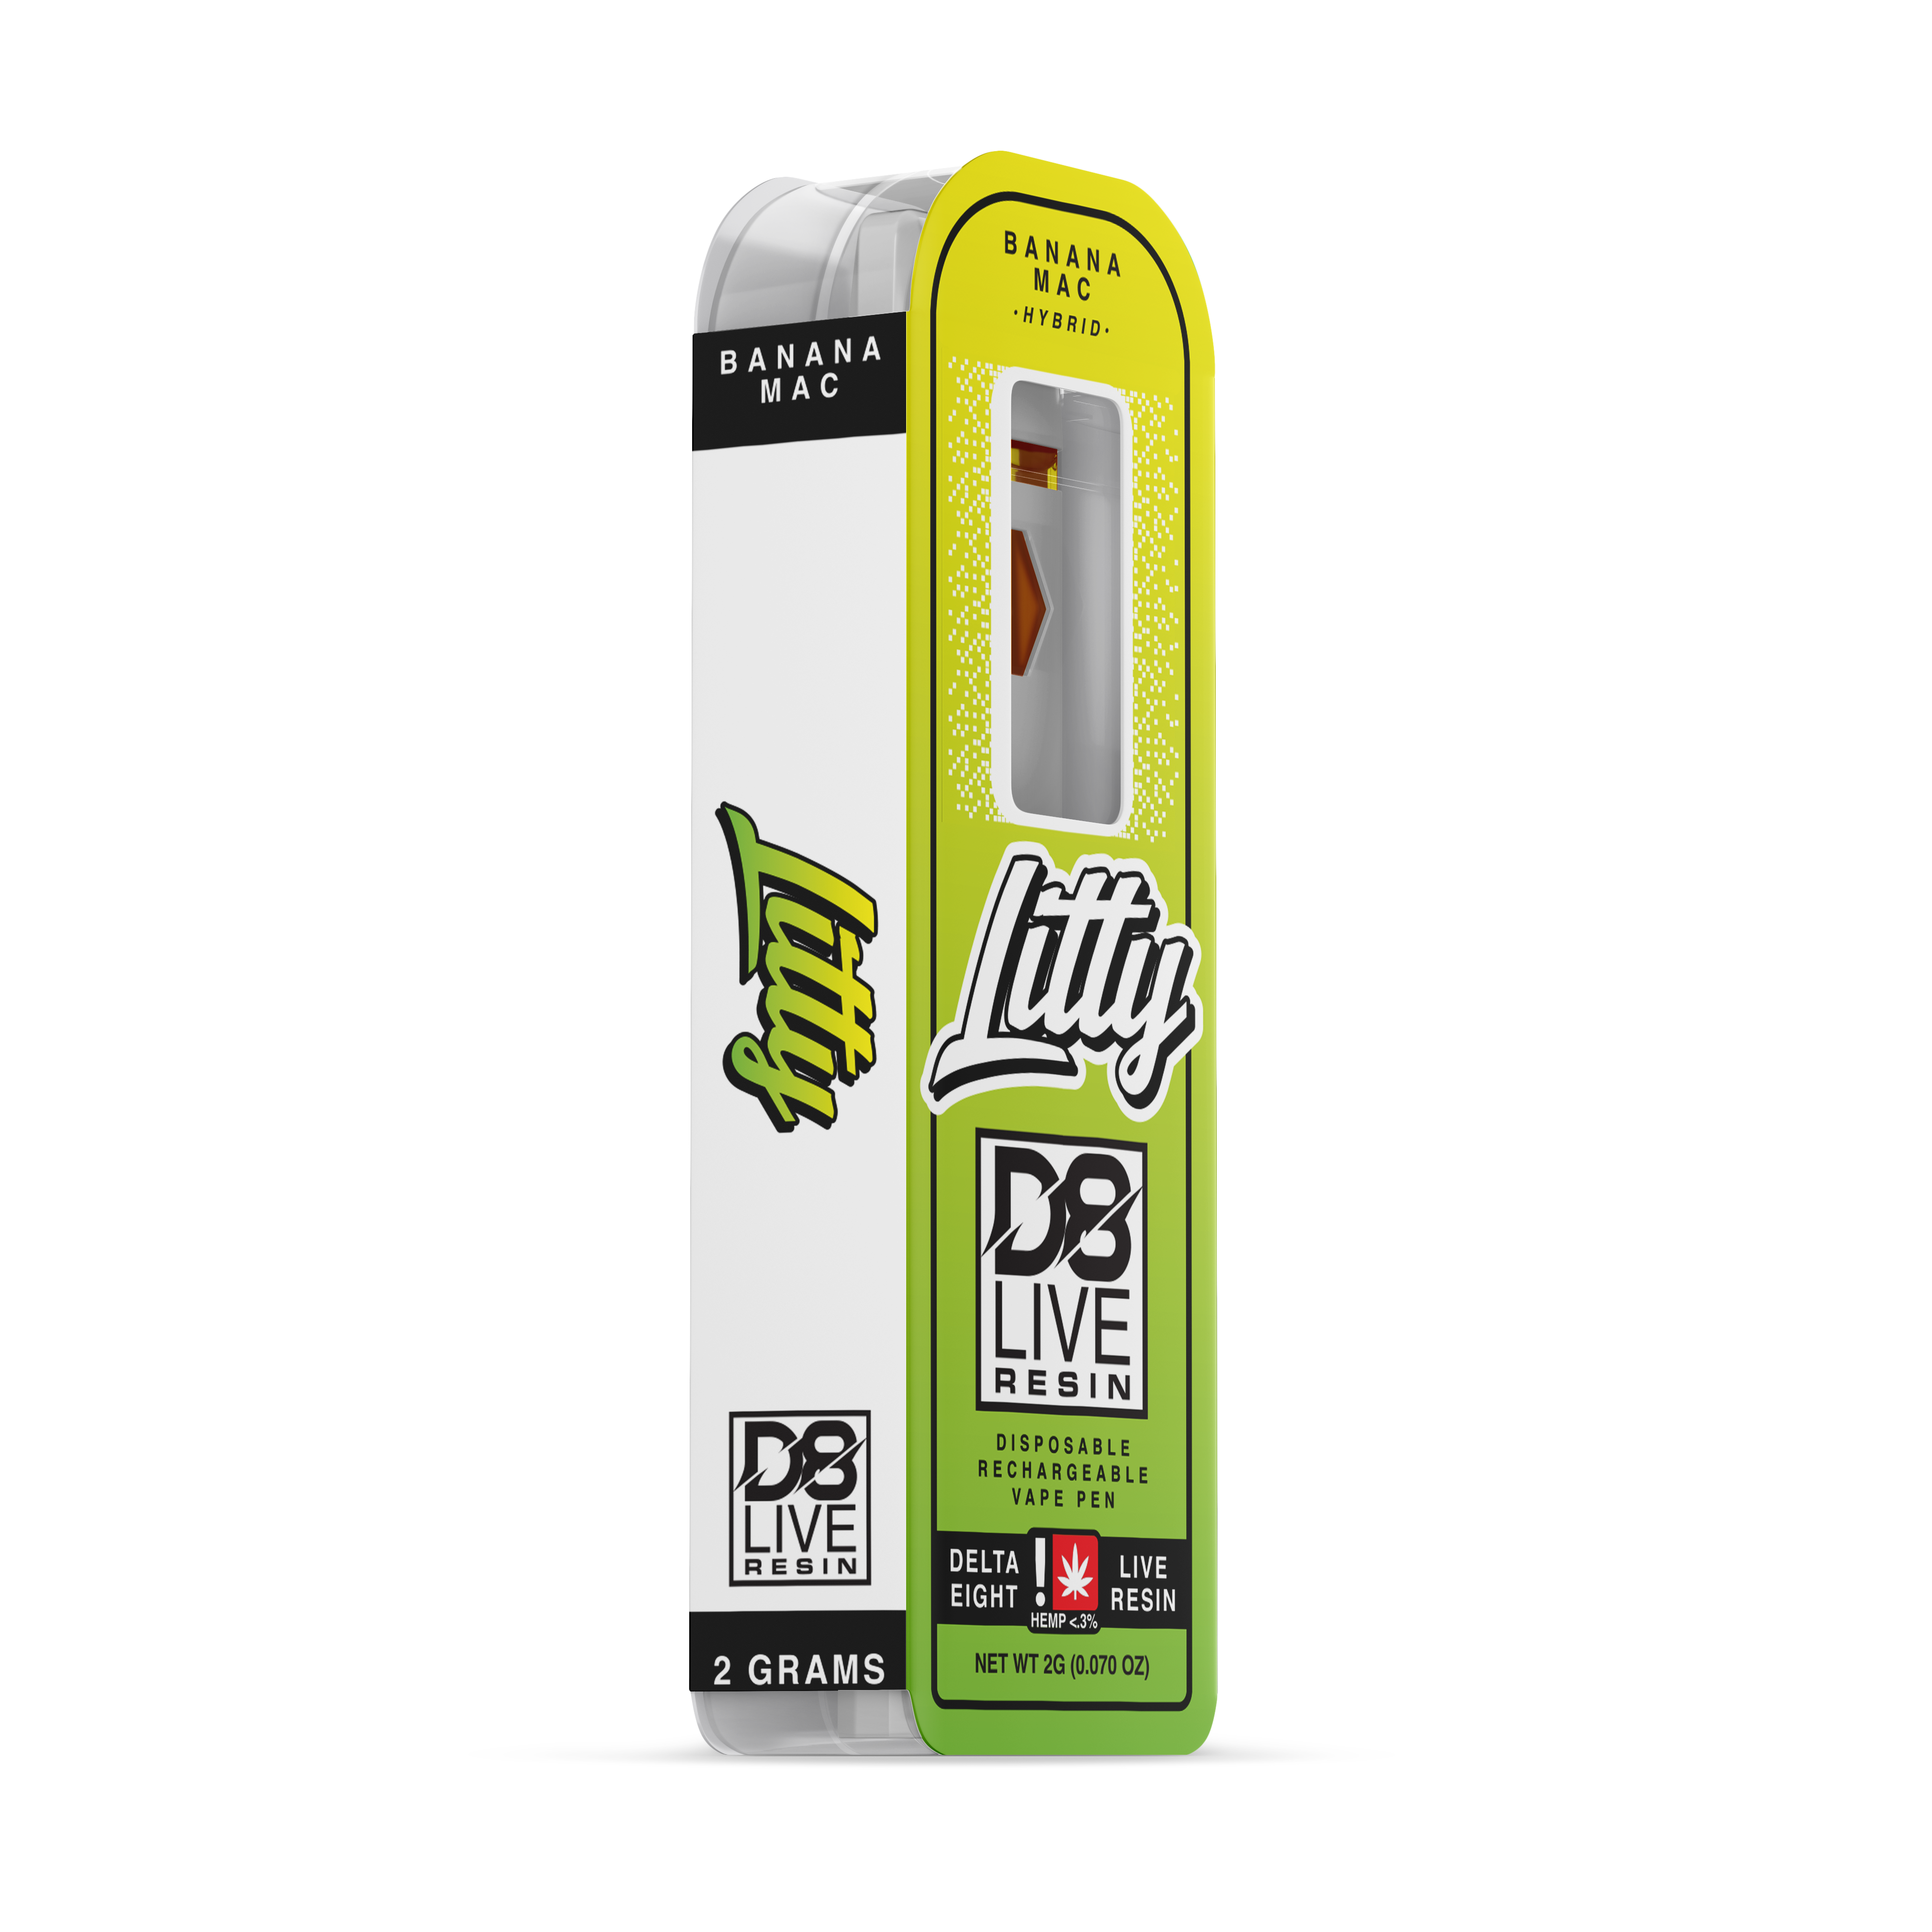 Litty - D8 Live Resin - HYBRID - Banana Mac - 2000mg 